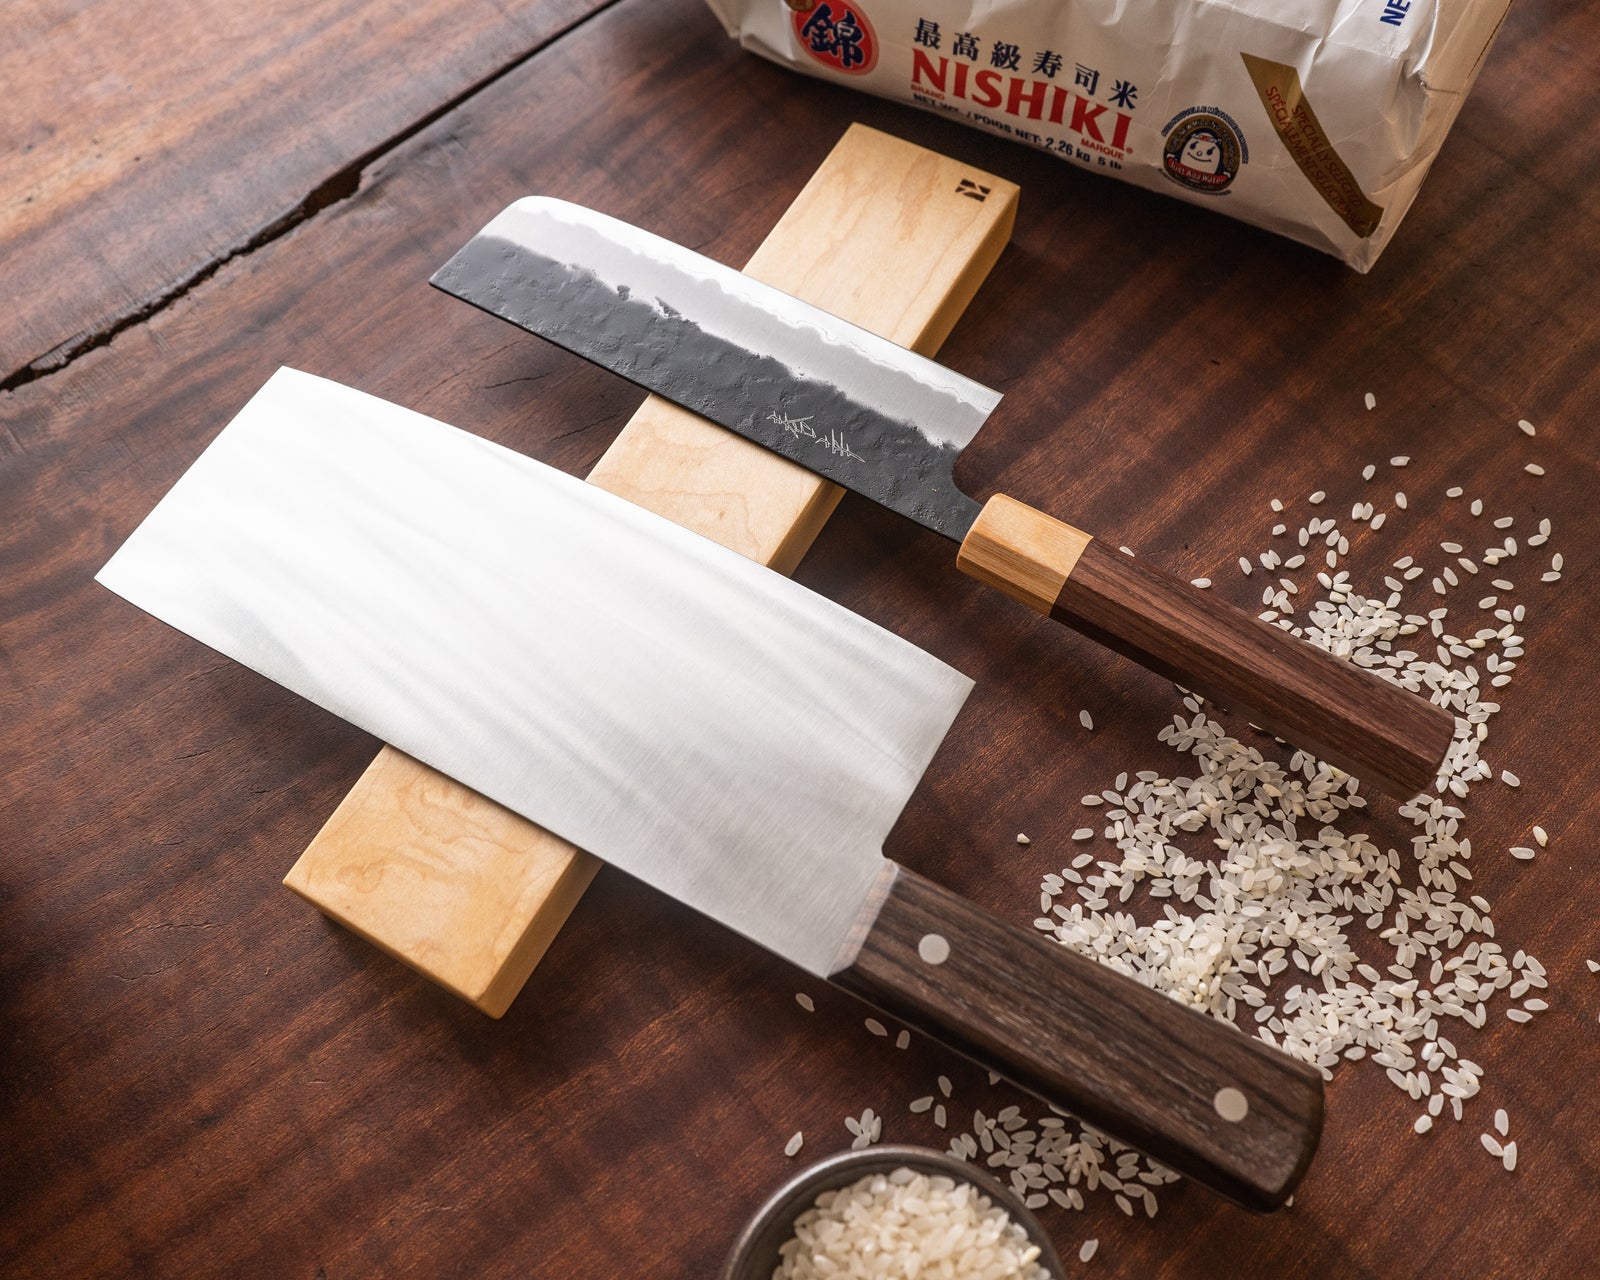 Knifewear™ Food Scoop  Knifewear - Handcrafted Japanese Kitchen Knives